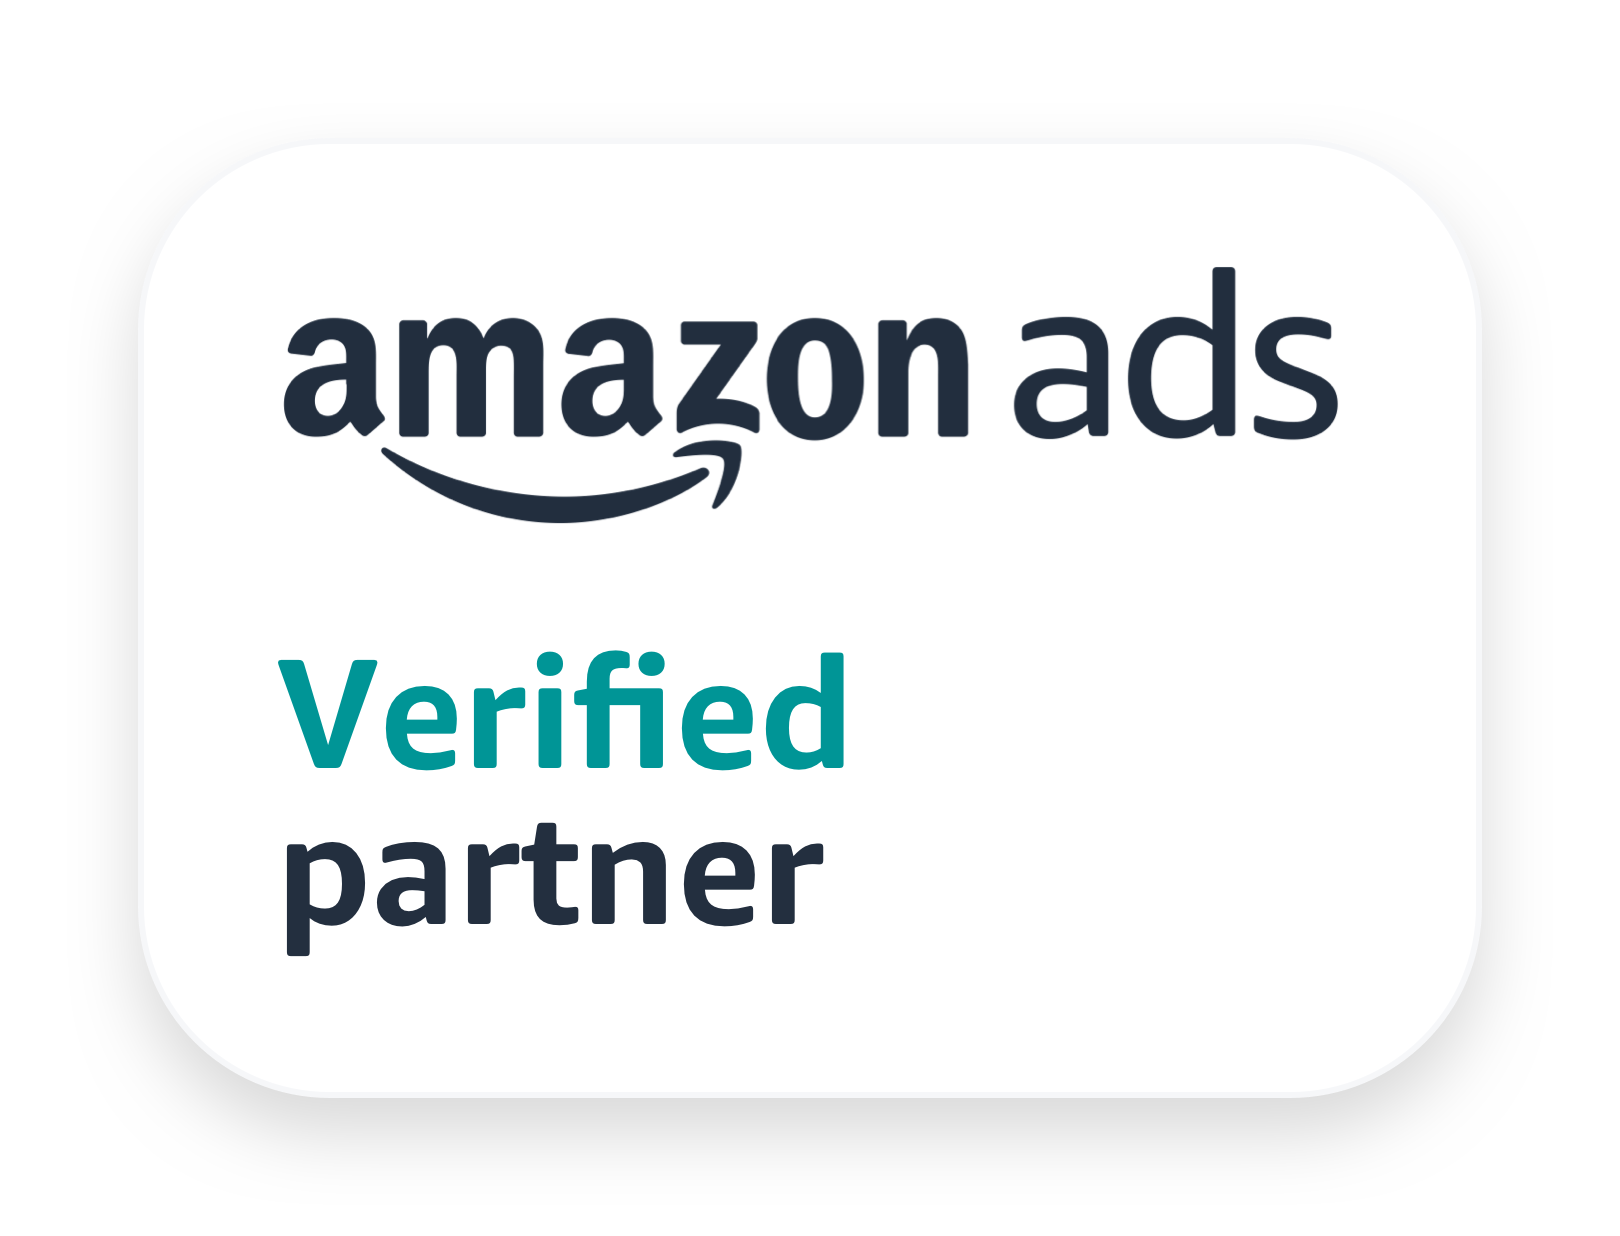 Rome, Lazio, Italy agency Digital Angels wins Amazon ads Partner award